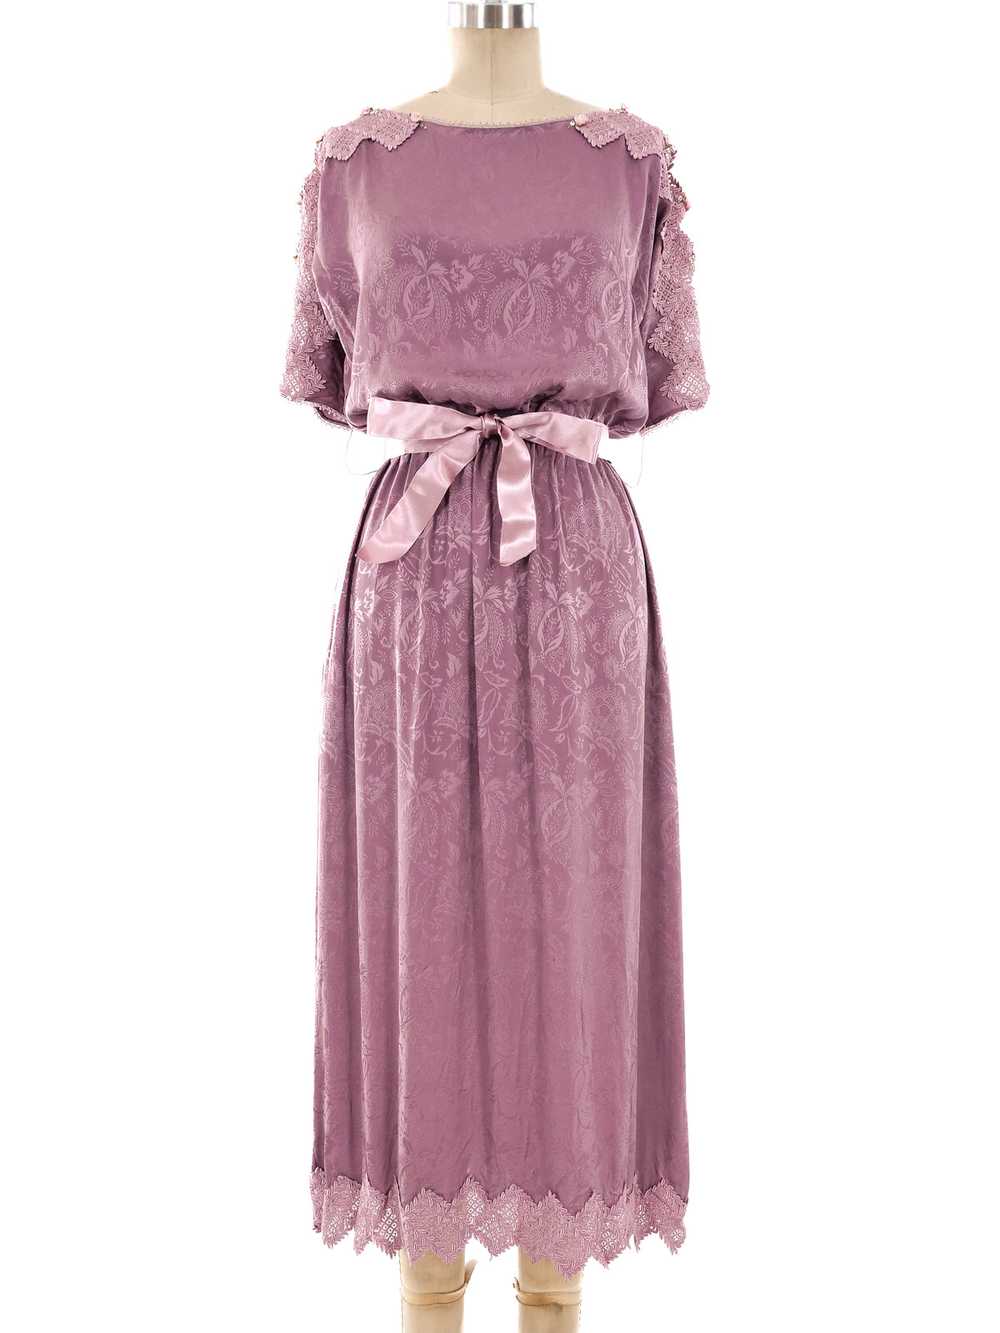 Lace Trimmed Jacquard Silk Dress - image 1